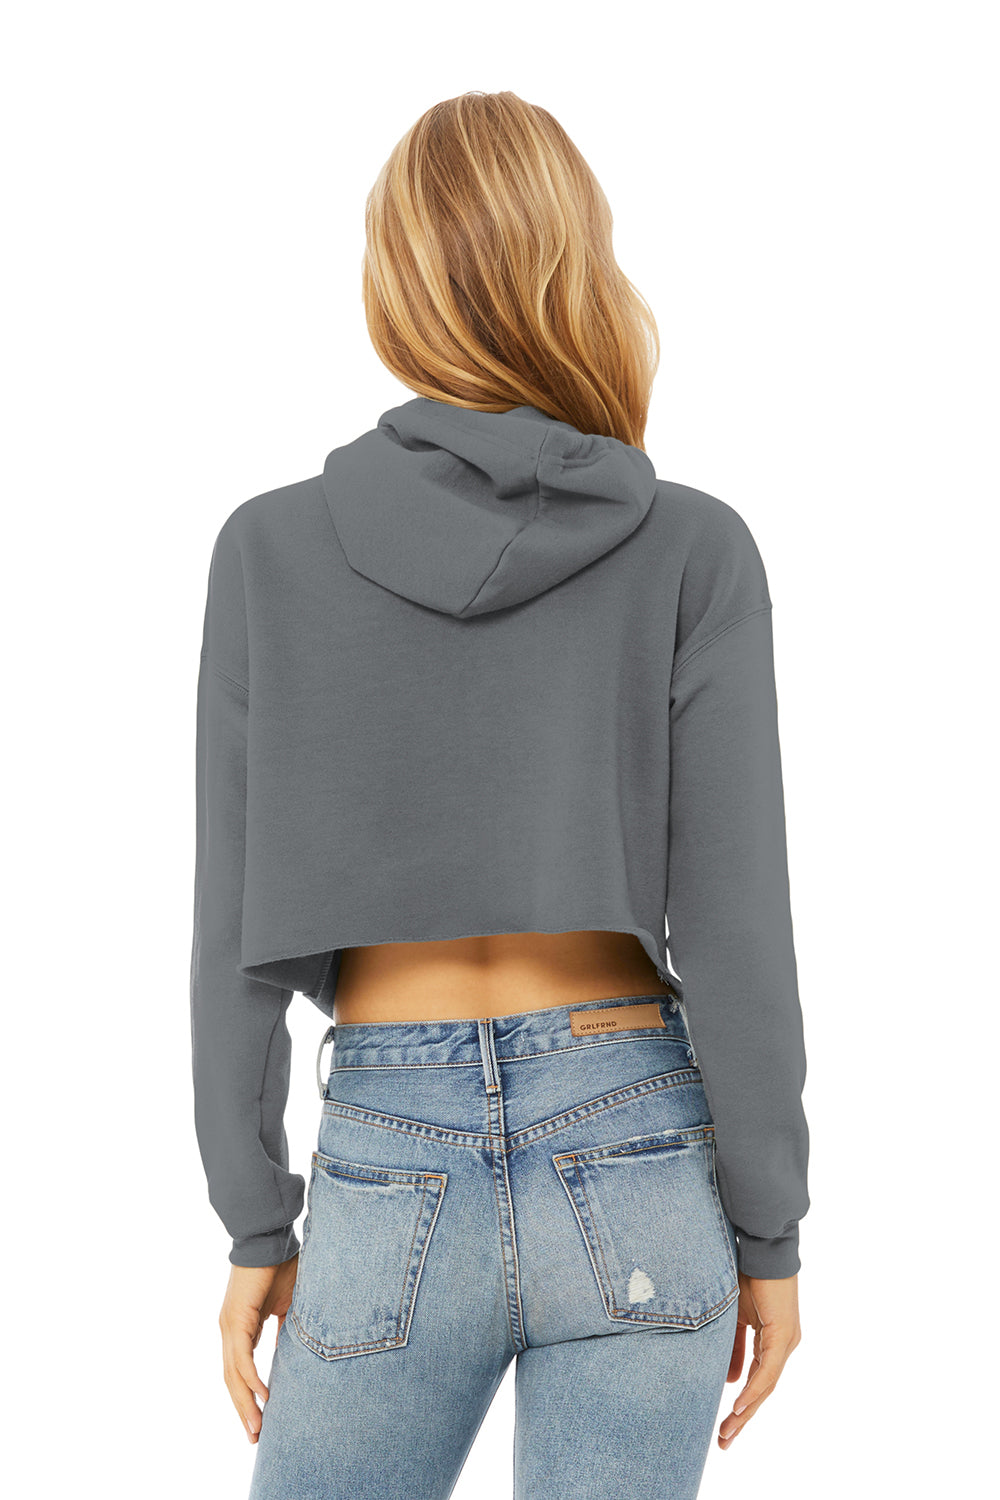 Bella + Canvas BC7502/B7502/7502 Womens Cropped Fleece Hooded Sweatshirt Hoodie Storm Grey Model Back